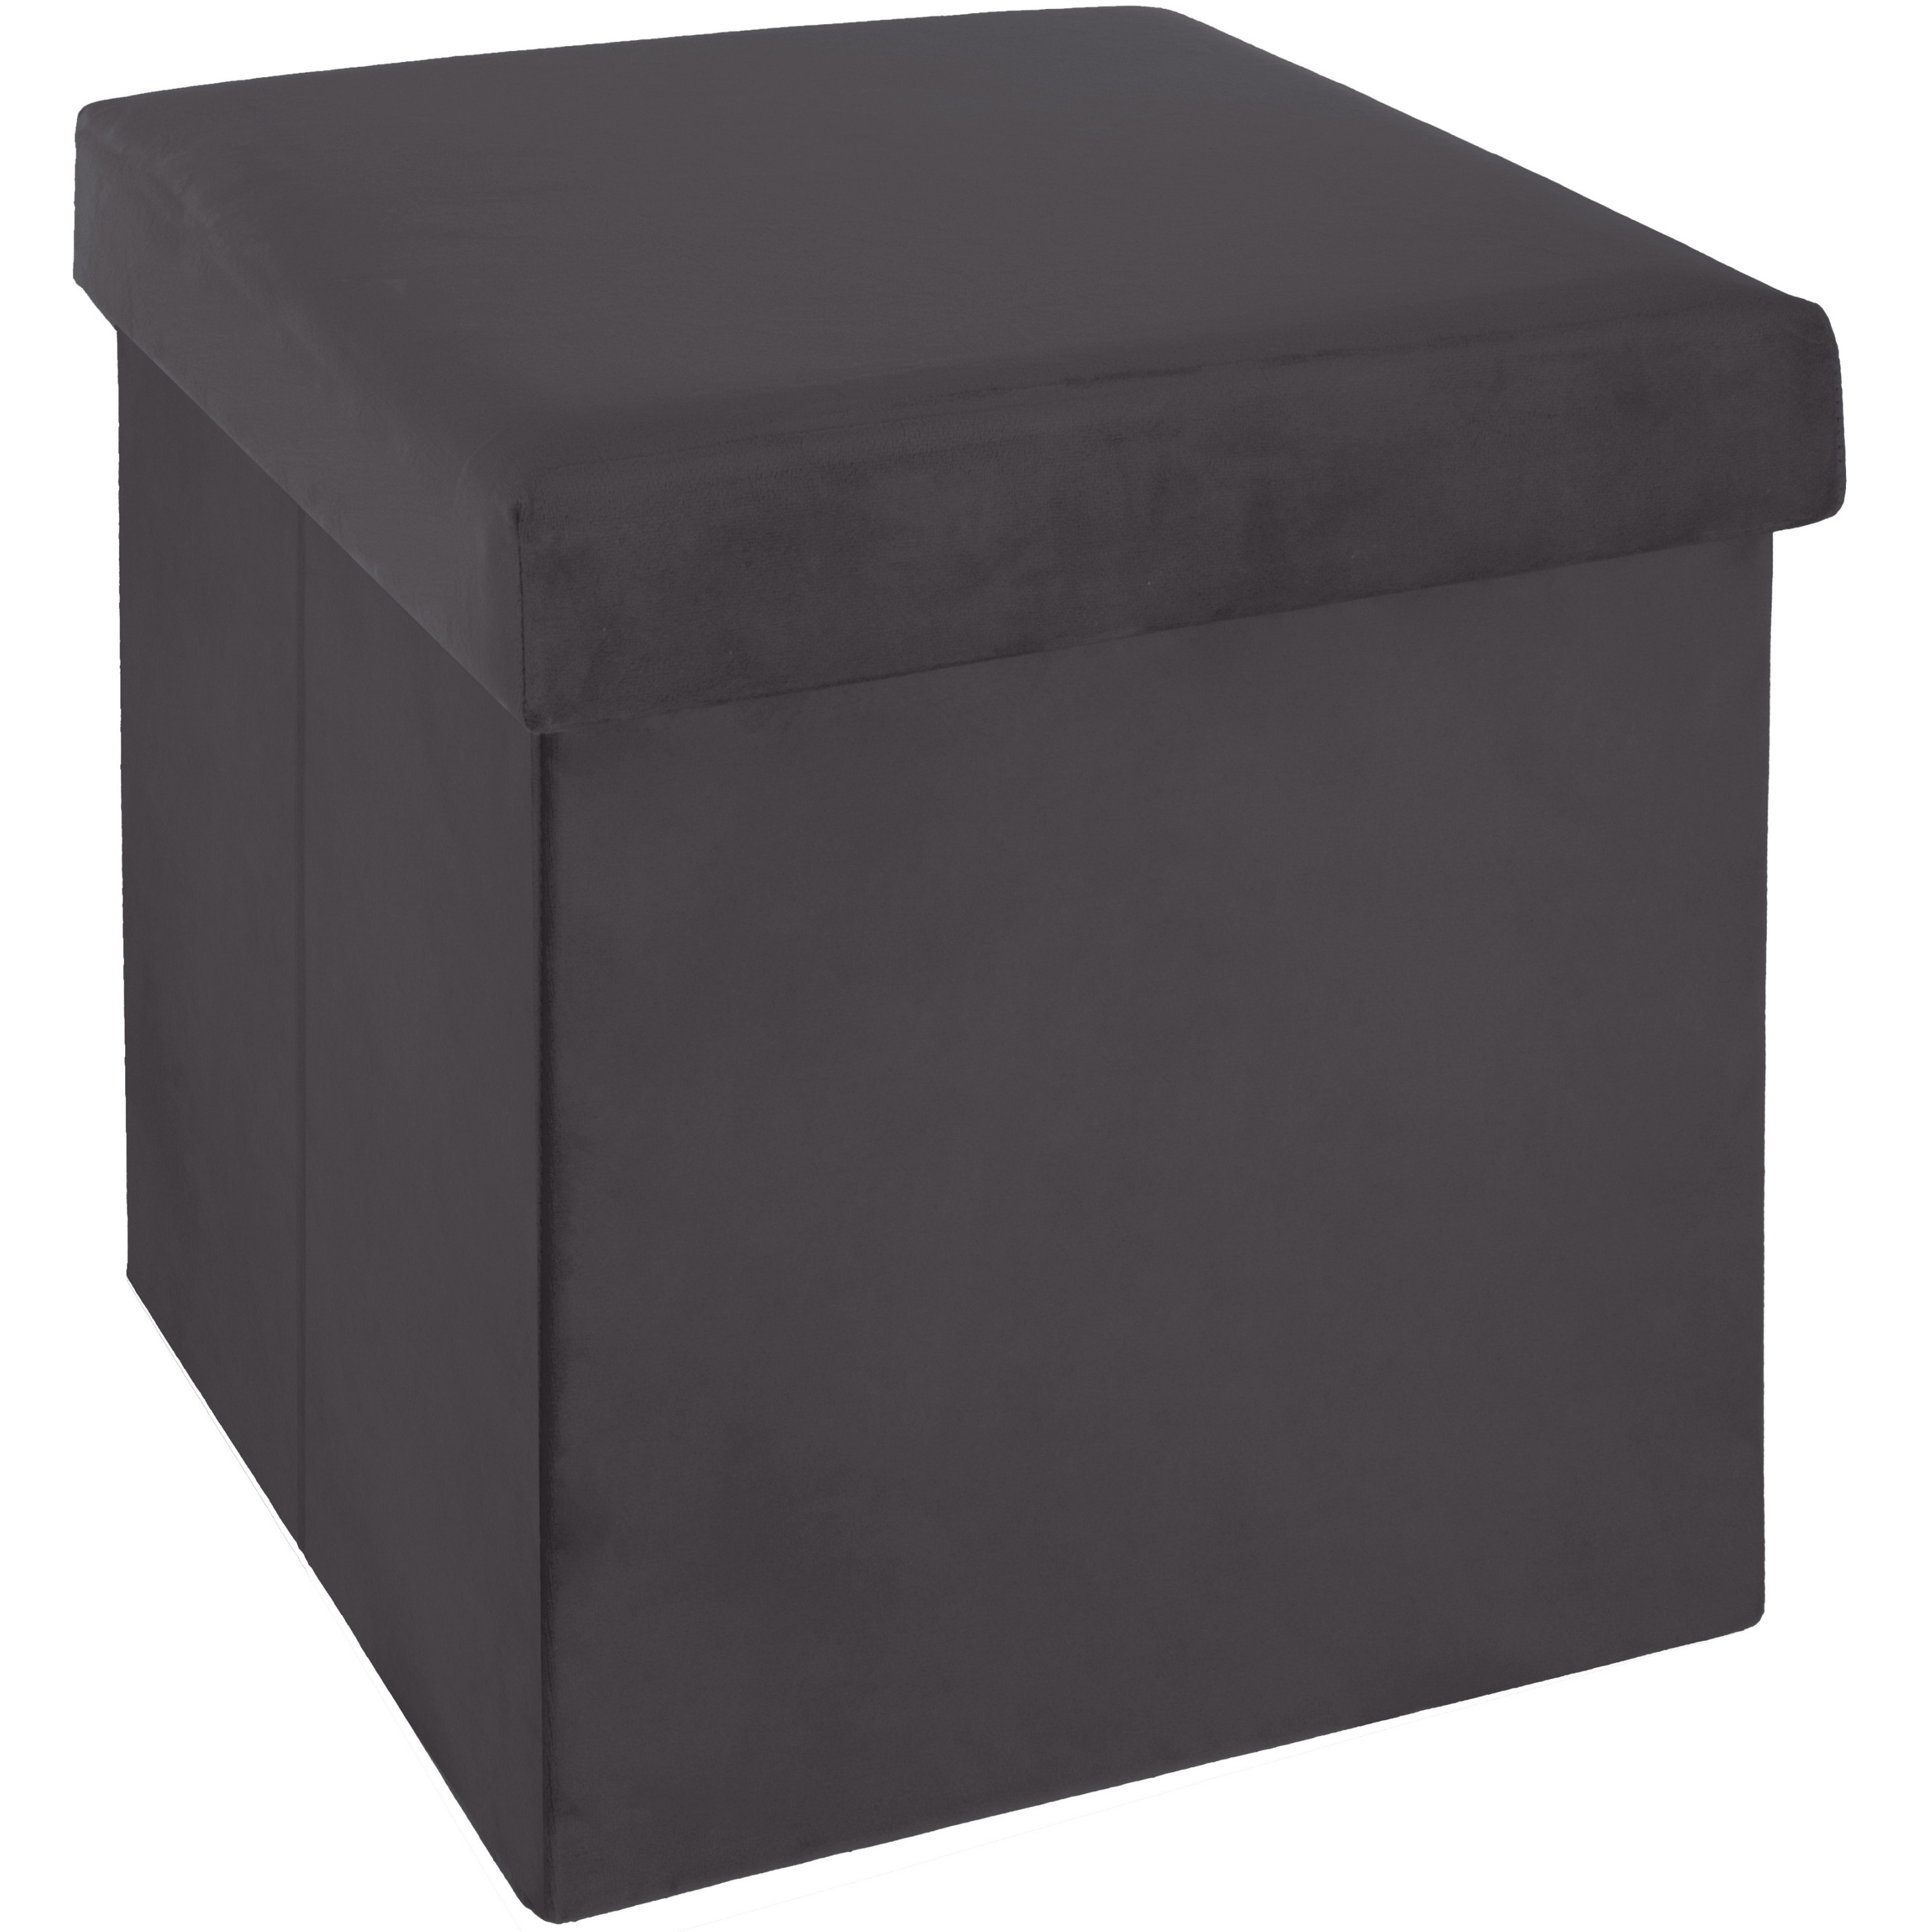 Poef-hocker opbergbox donkergrijs kunststof-mdf 38 x 38 x 38 cm opvouwbaar